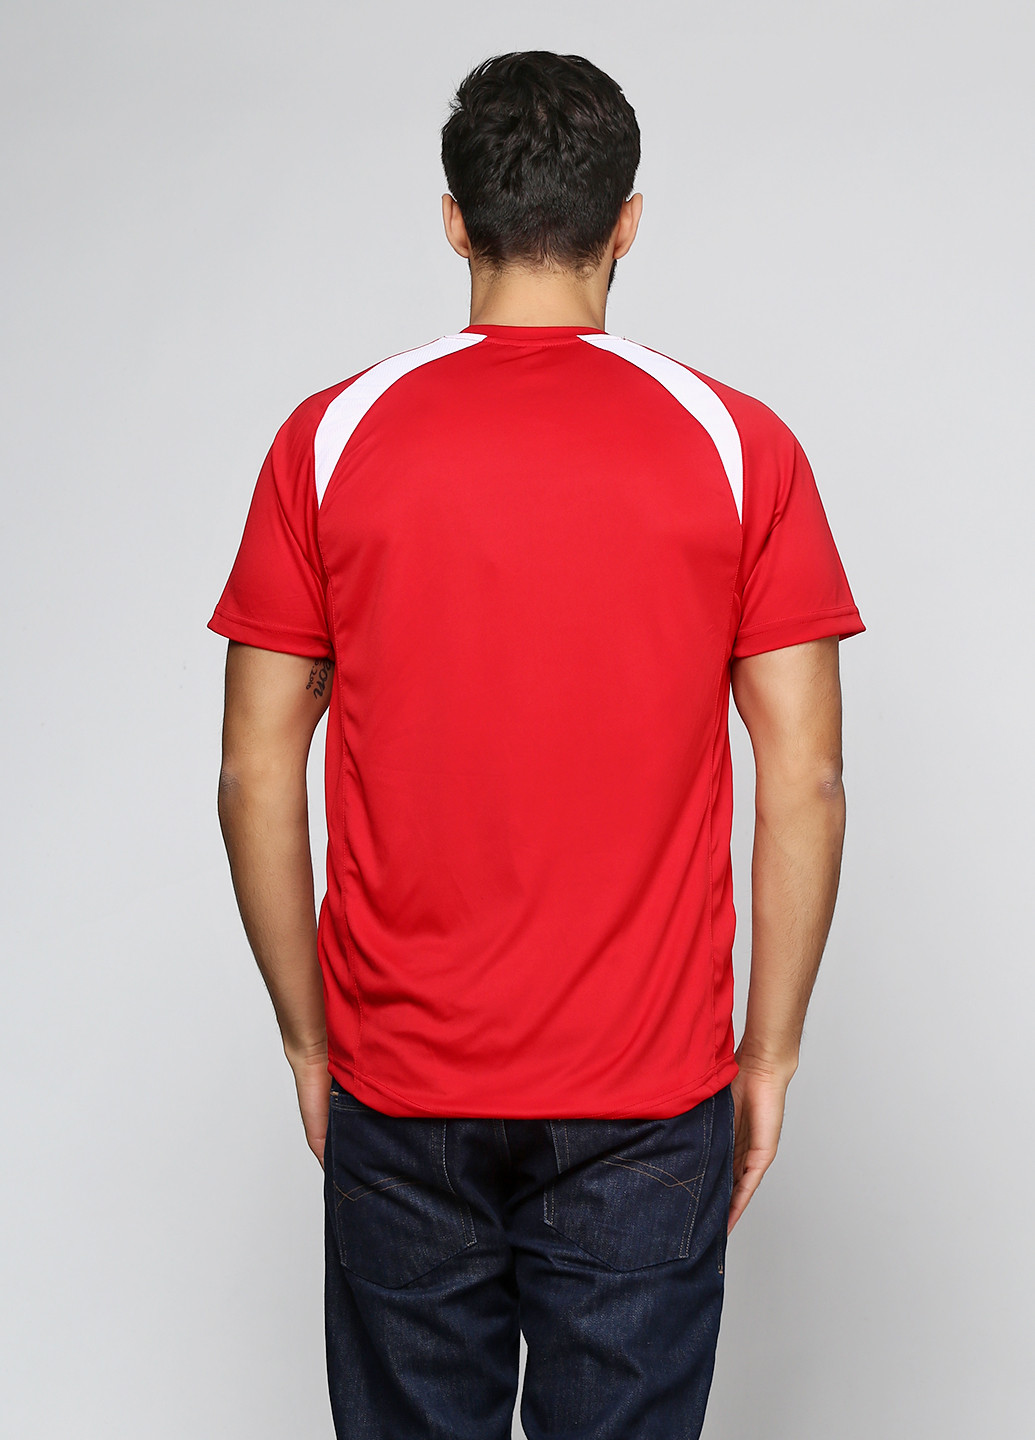 Красная футболка с коротким рукавом Sol's